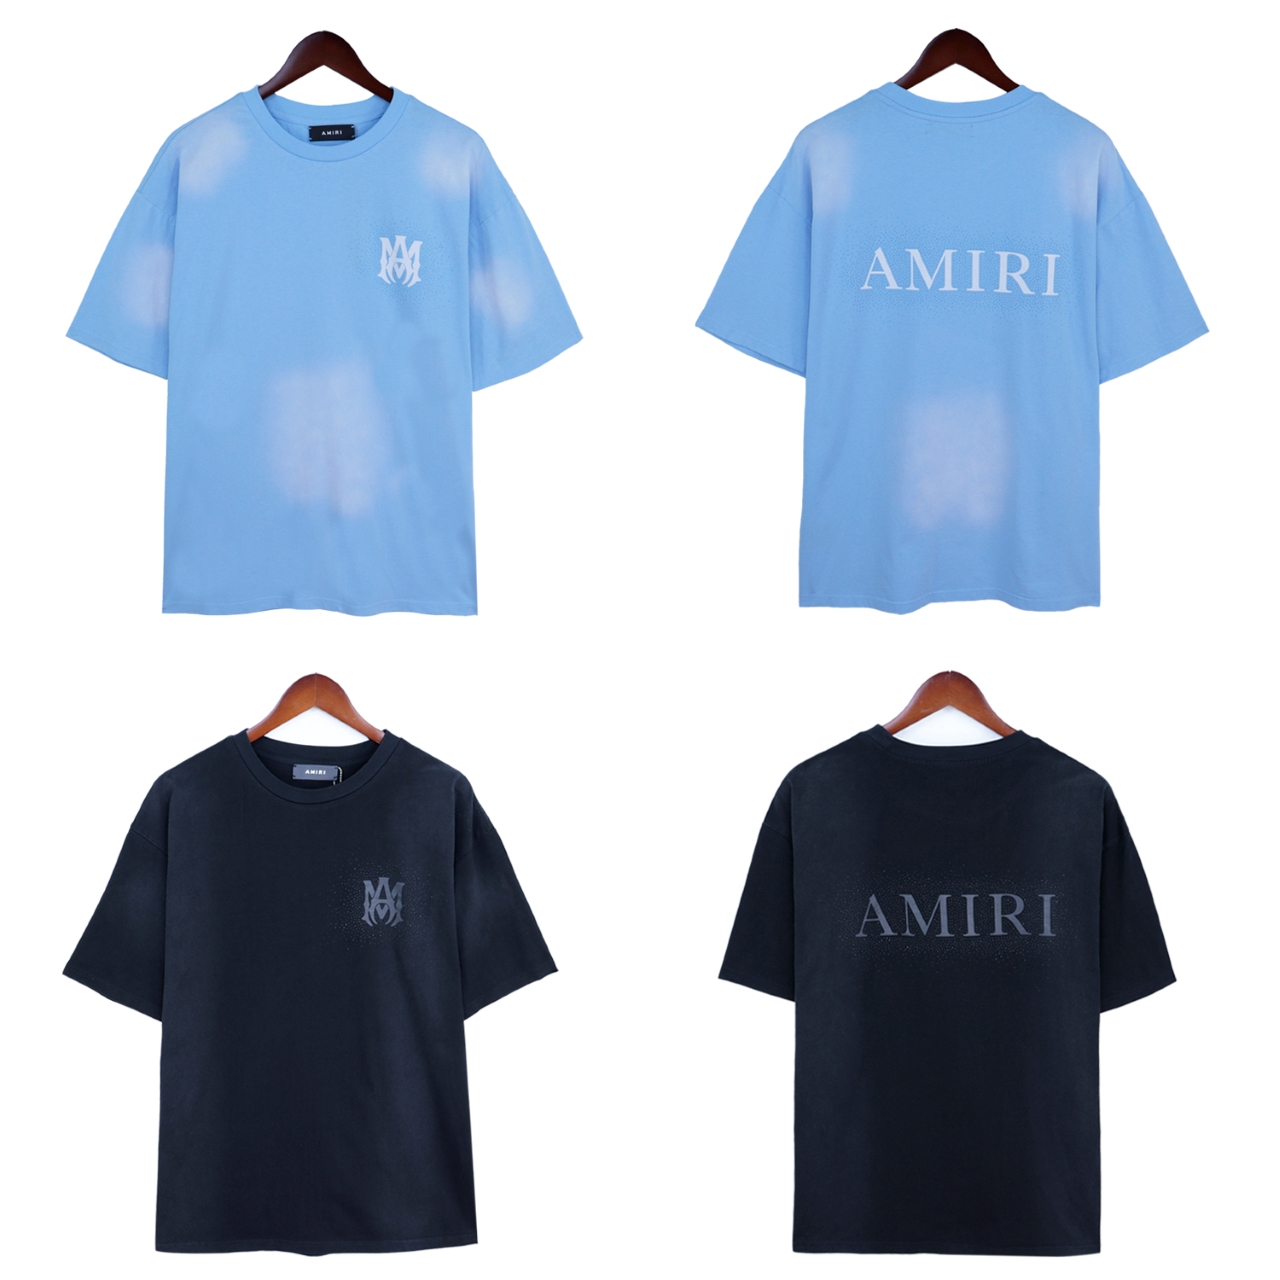 Amiri Clothing T-Shirt Top Quality
 Short Sleeve